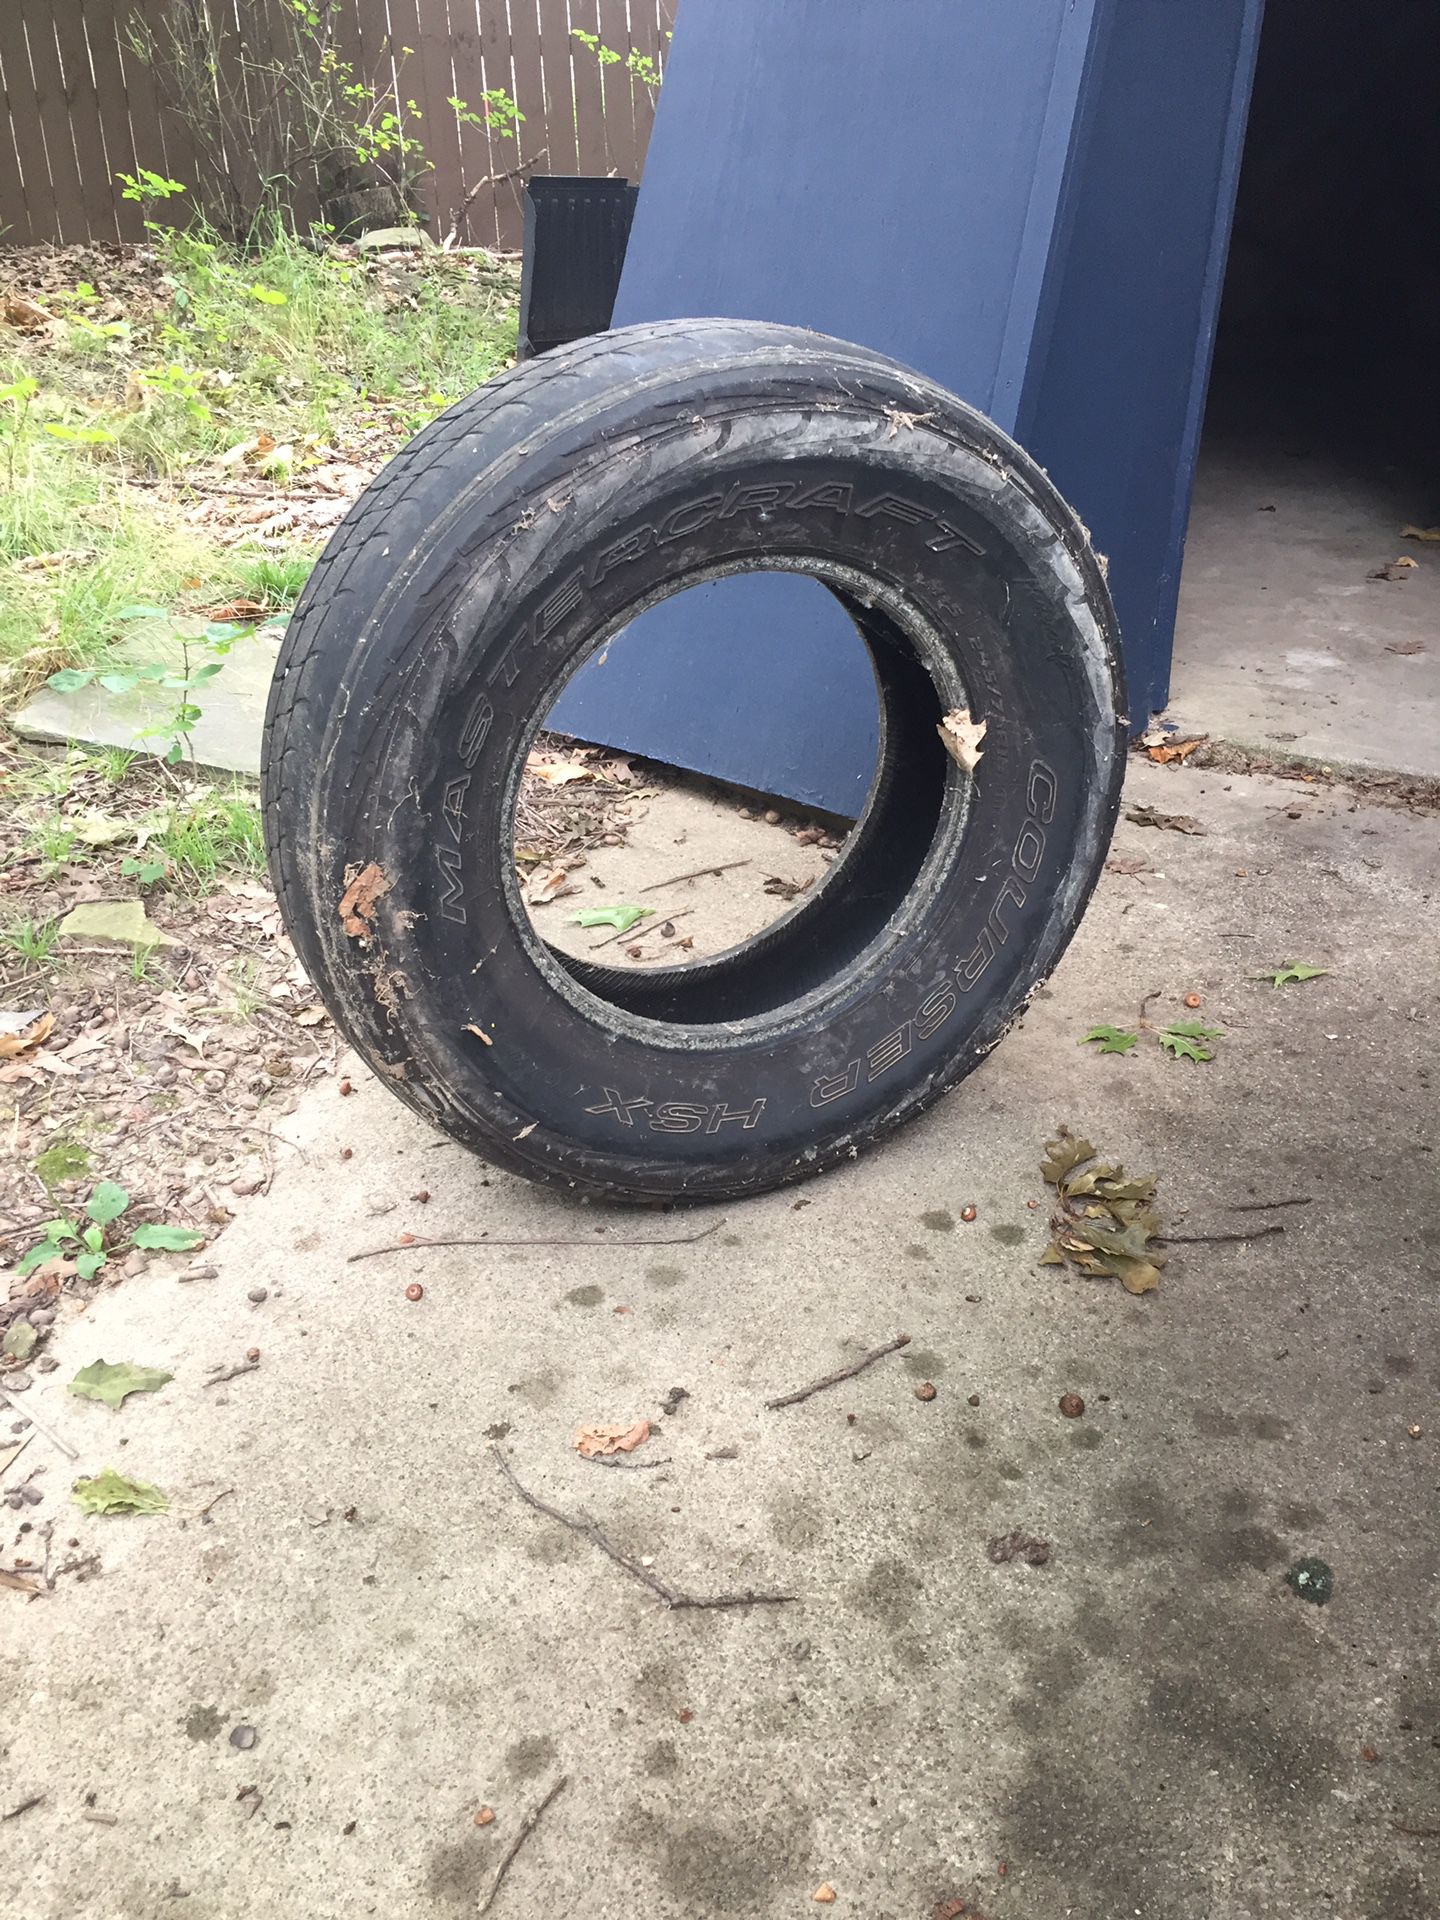 FREE Tires for flower bed/ garden